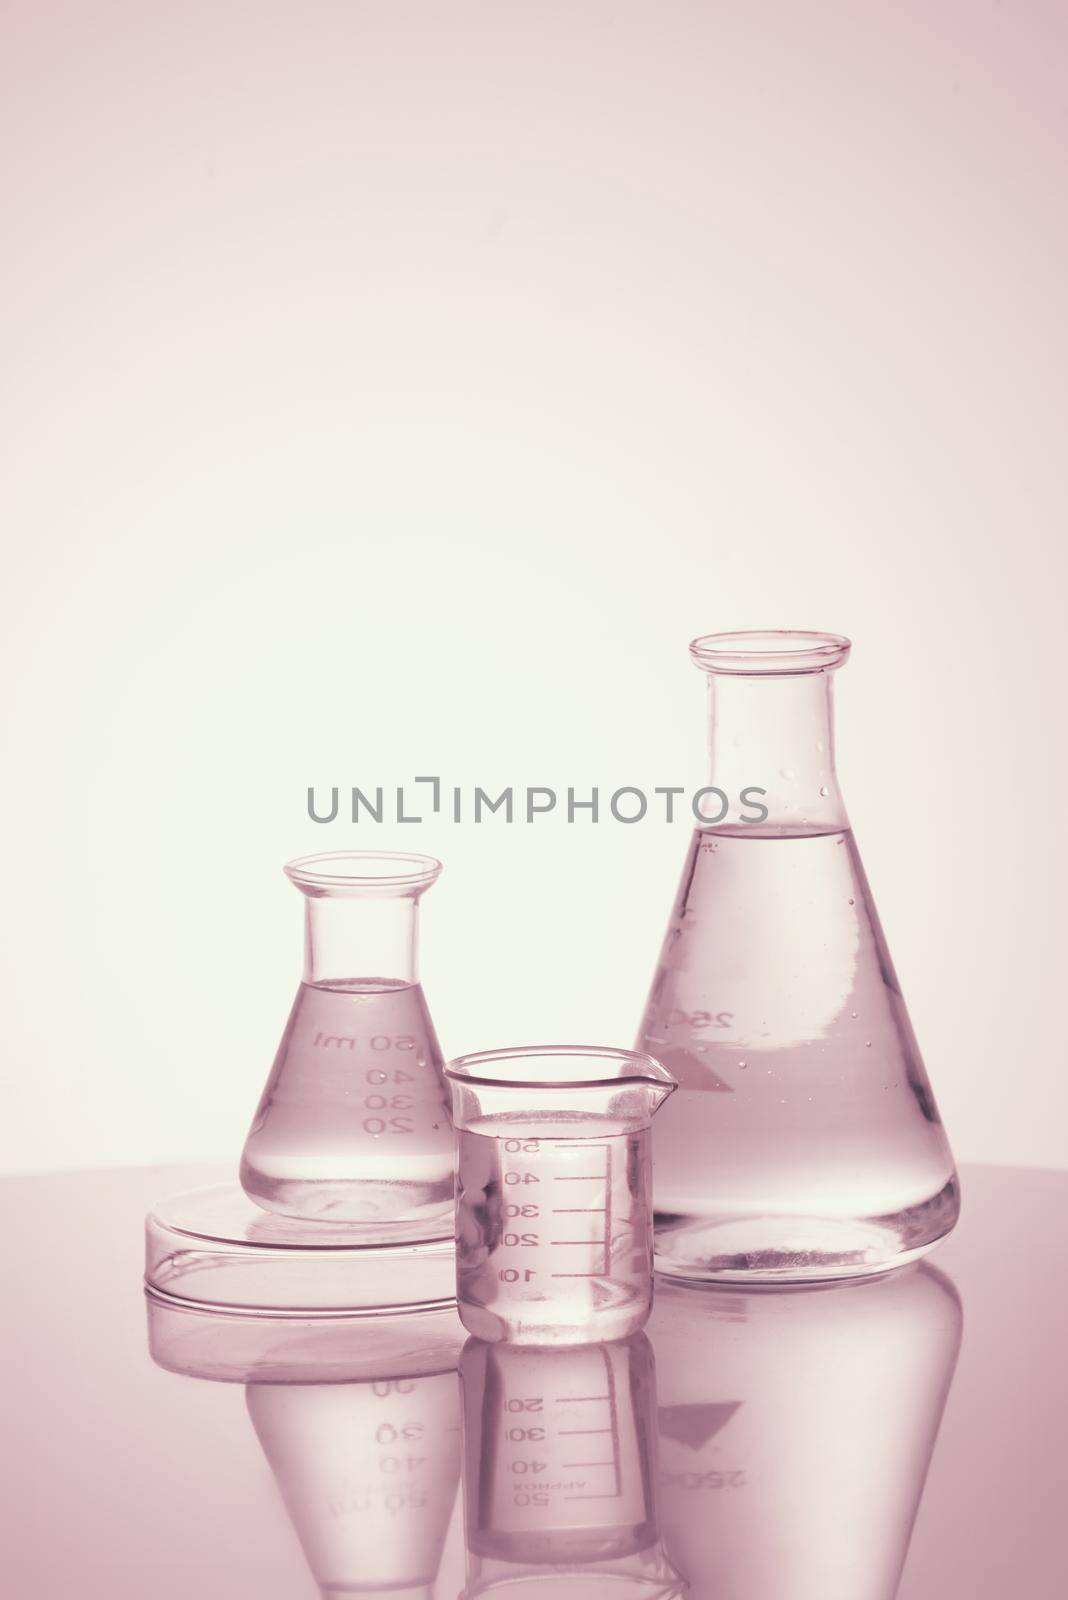 Assorted laboratory glassware equipment - Image by makidotvn